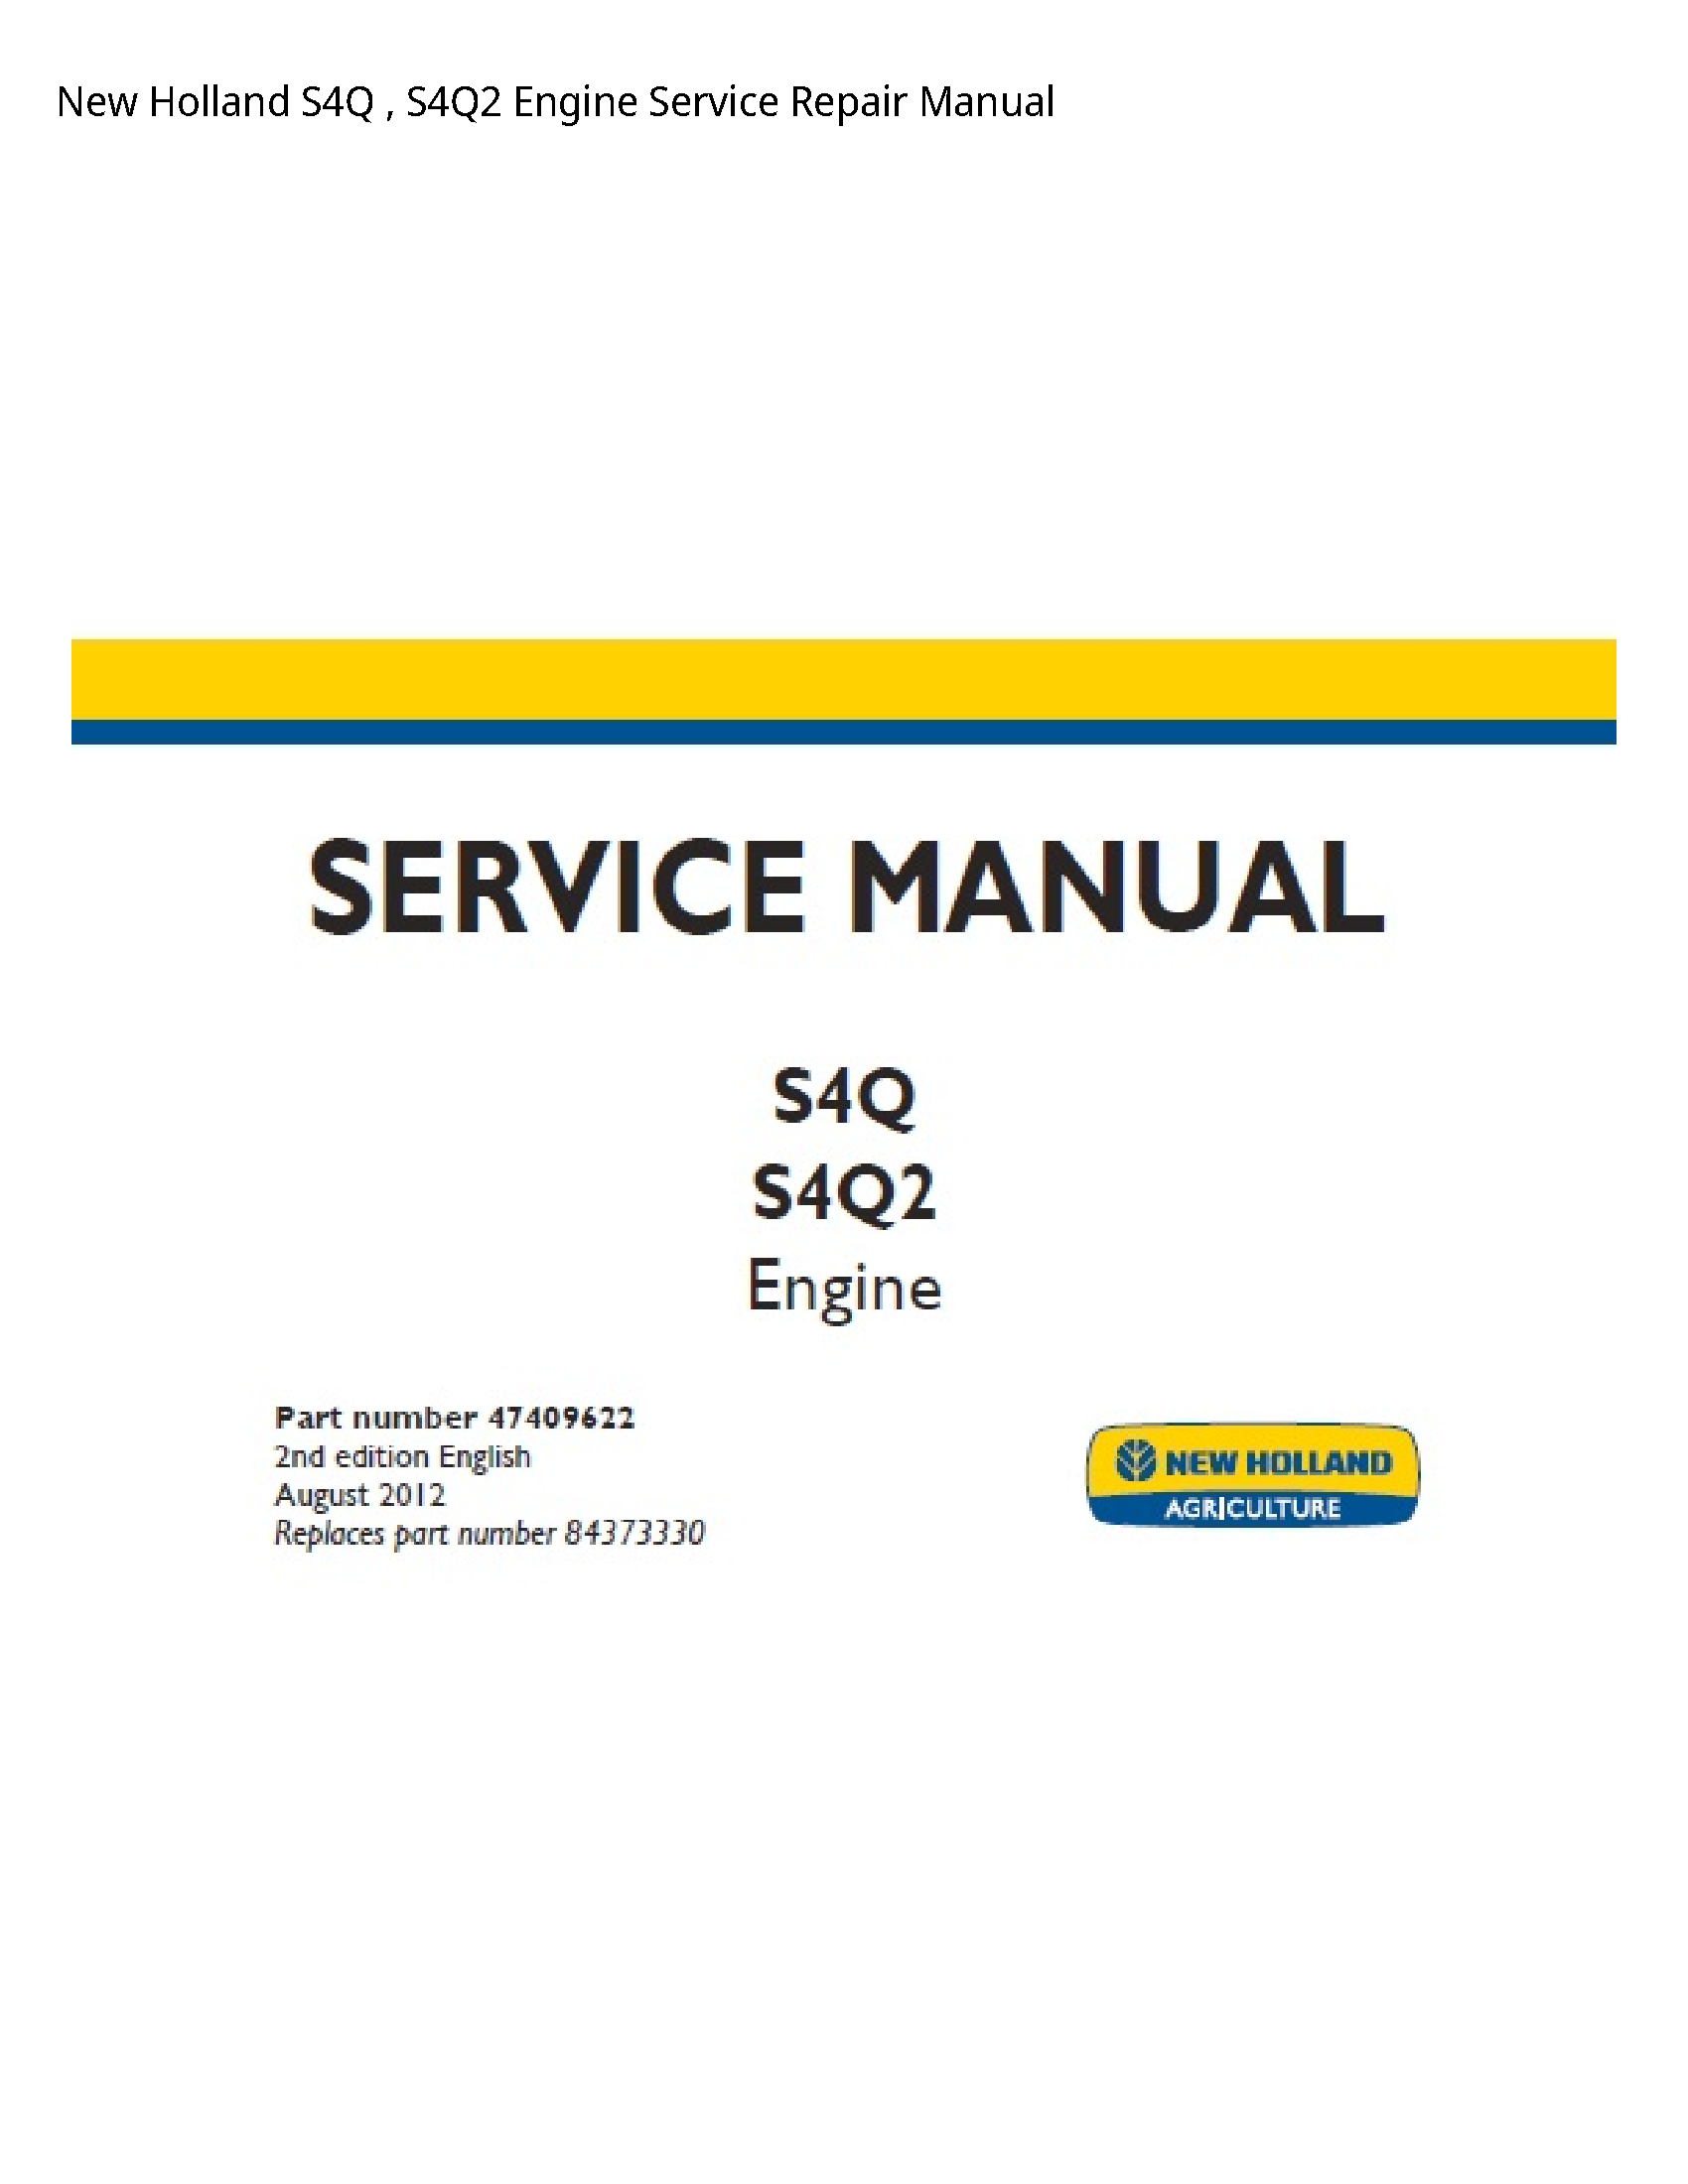 New Holland S4Q Engine manual